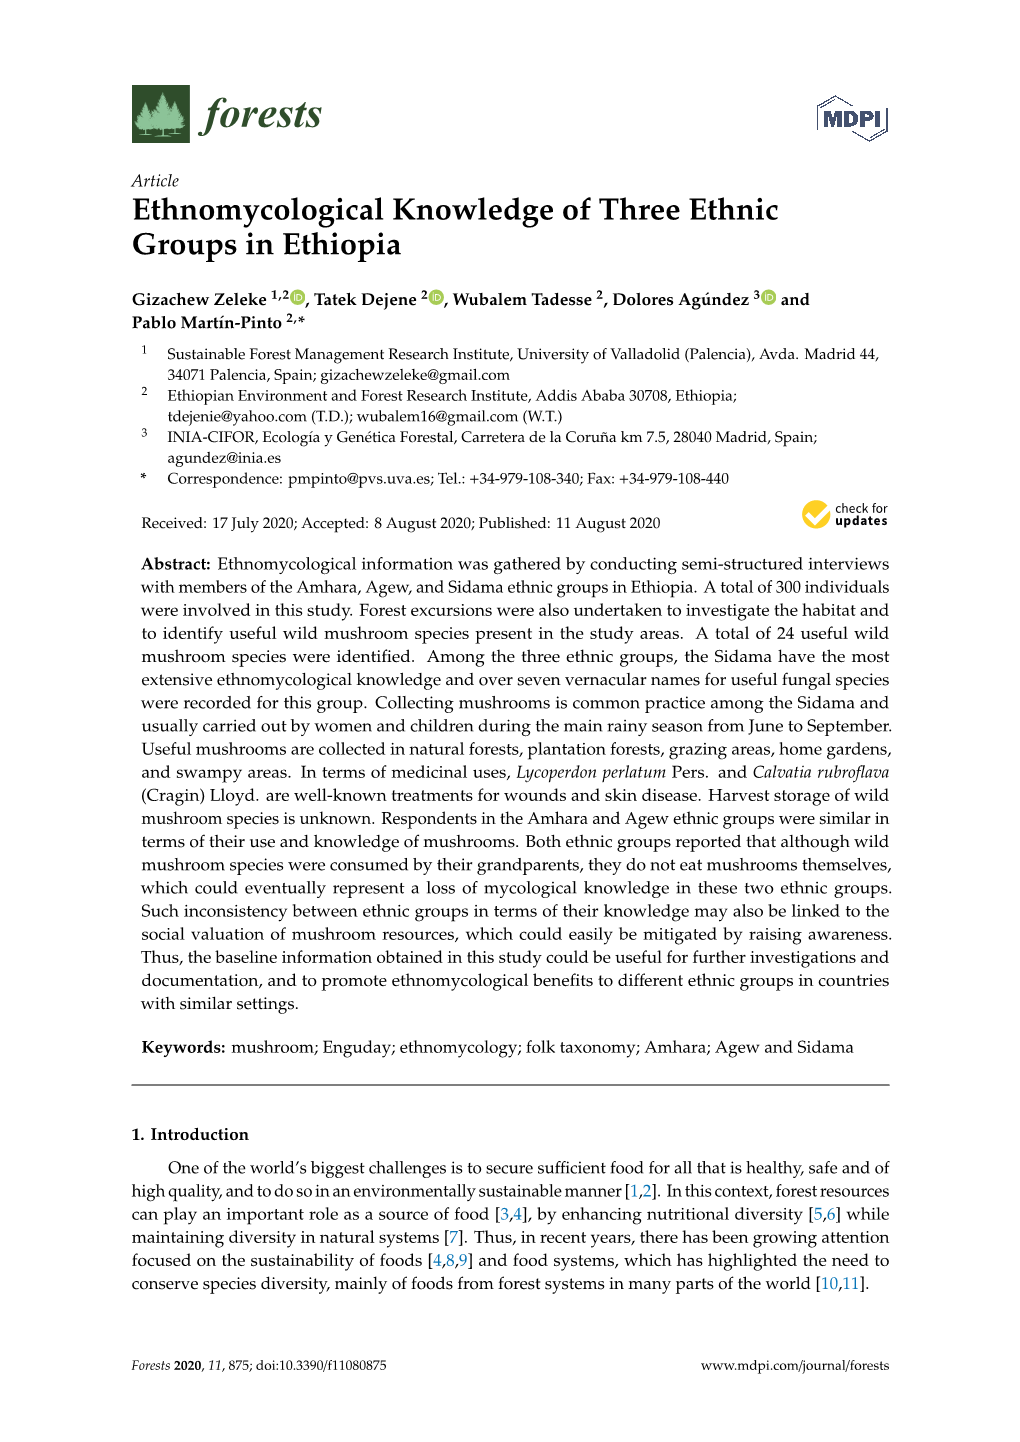 Ethnomycological Knowledge of Three Ethnic Groups in Ethiopia